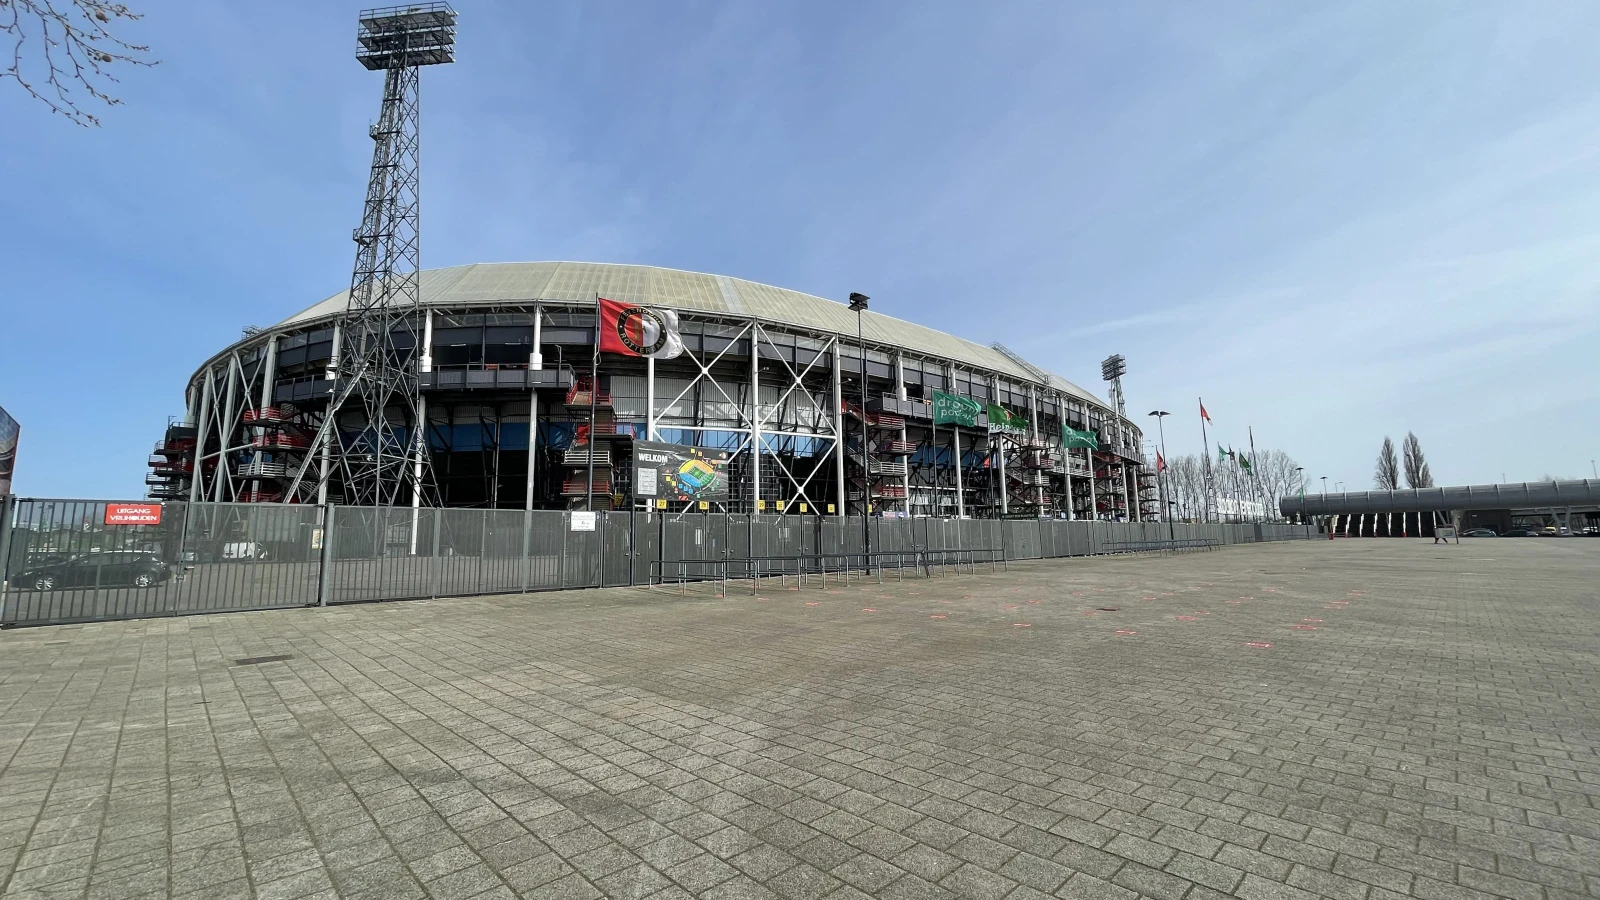 Geen afhakers in financiering van nieuw stadion, meldt Feyenoord City